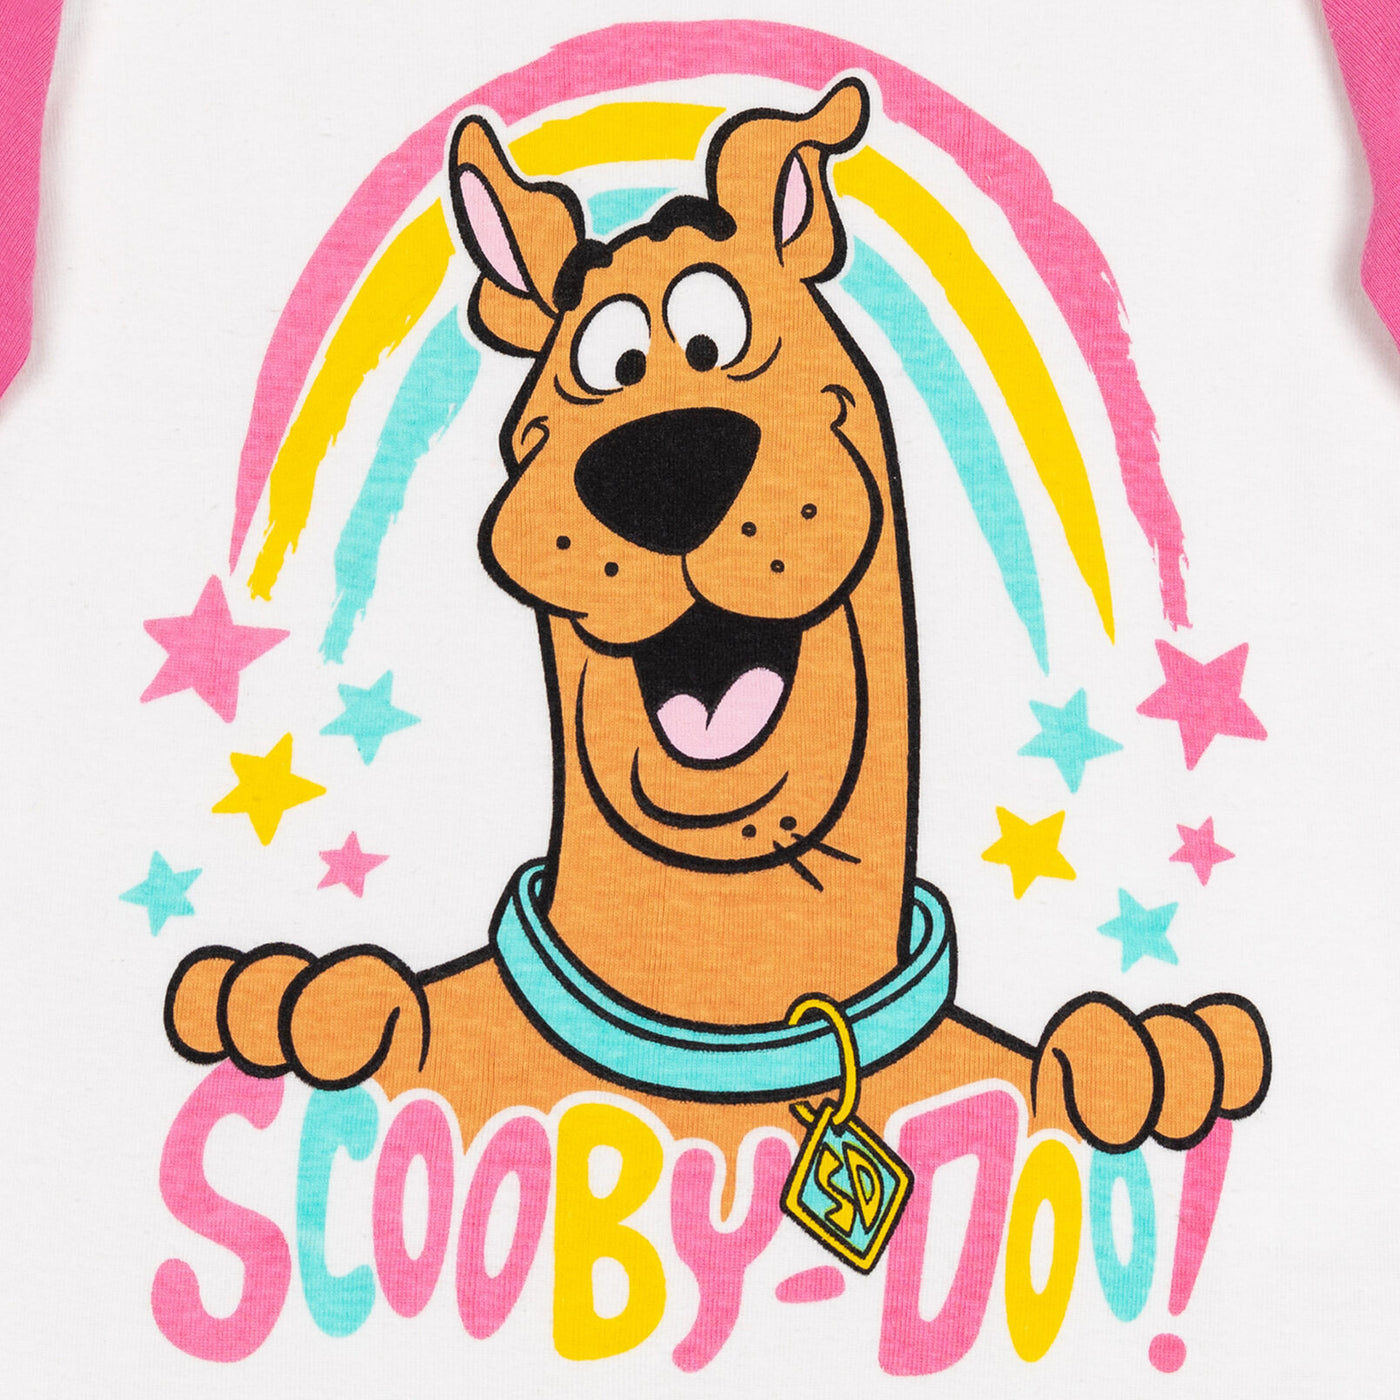 Scooby-Doo Scooby Doo Pajama Shirt and Pants Sleep Set